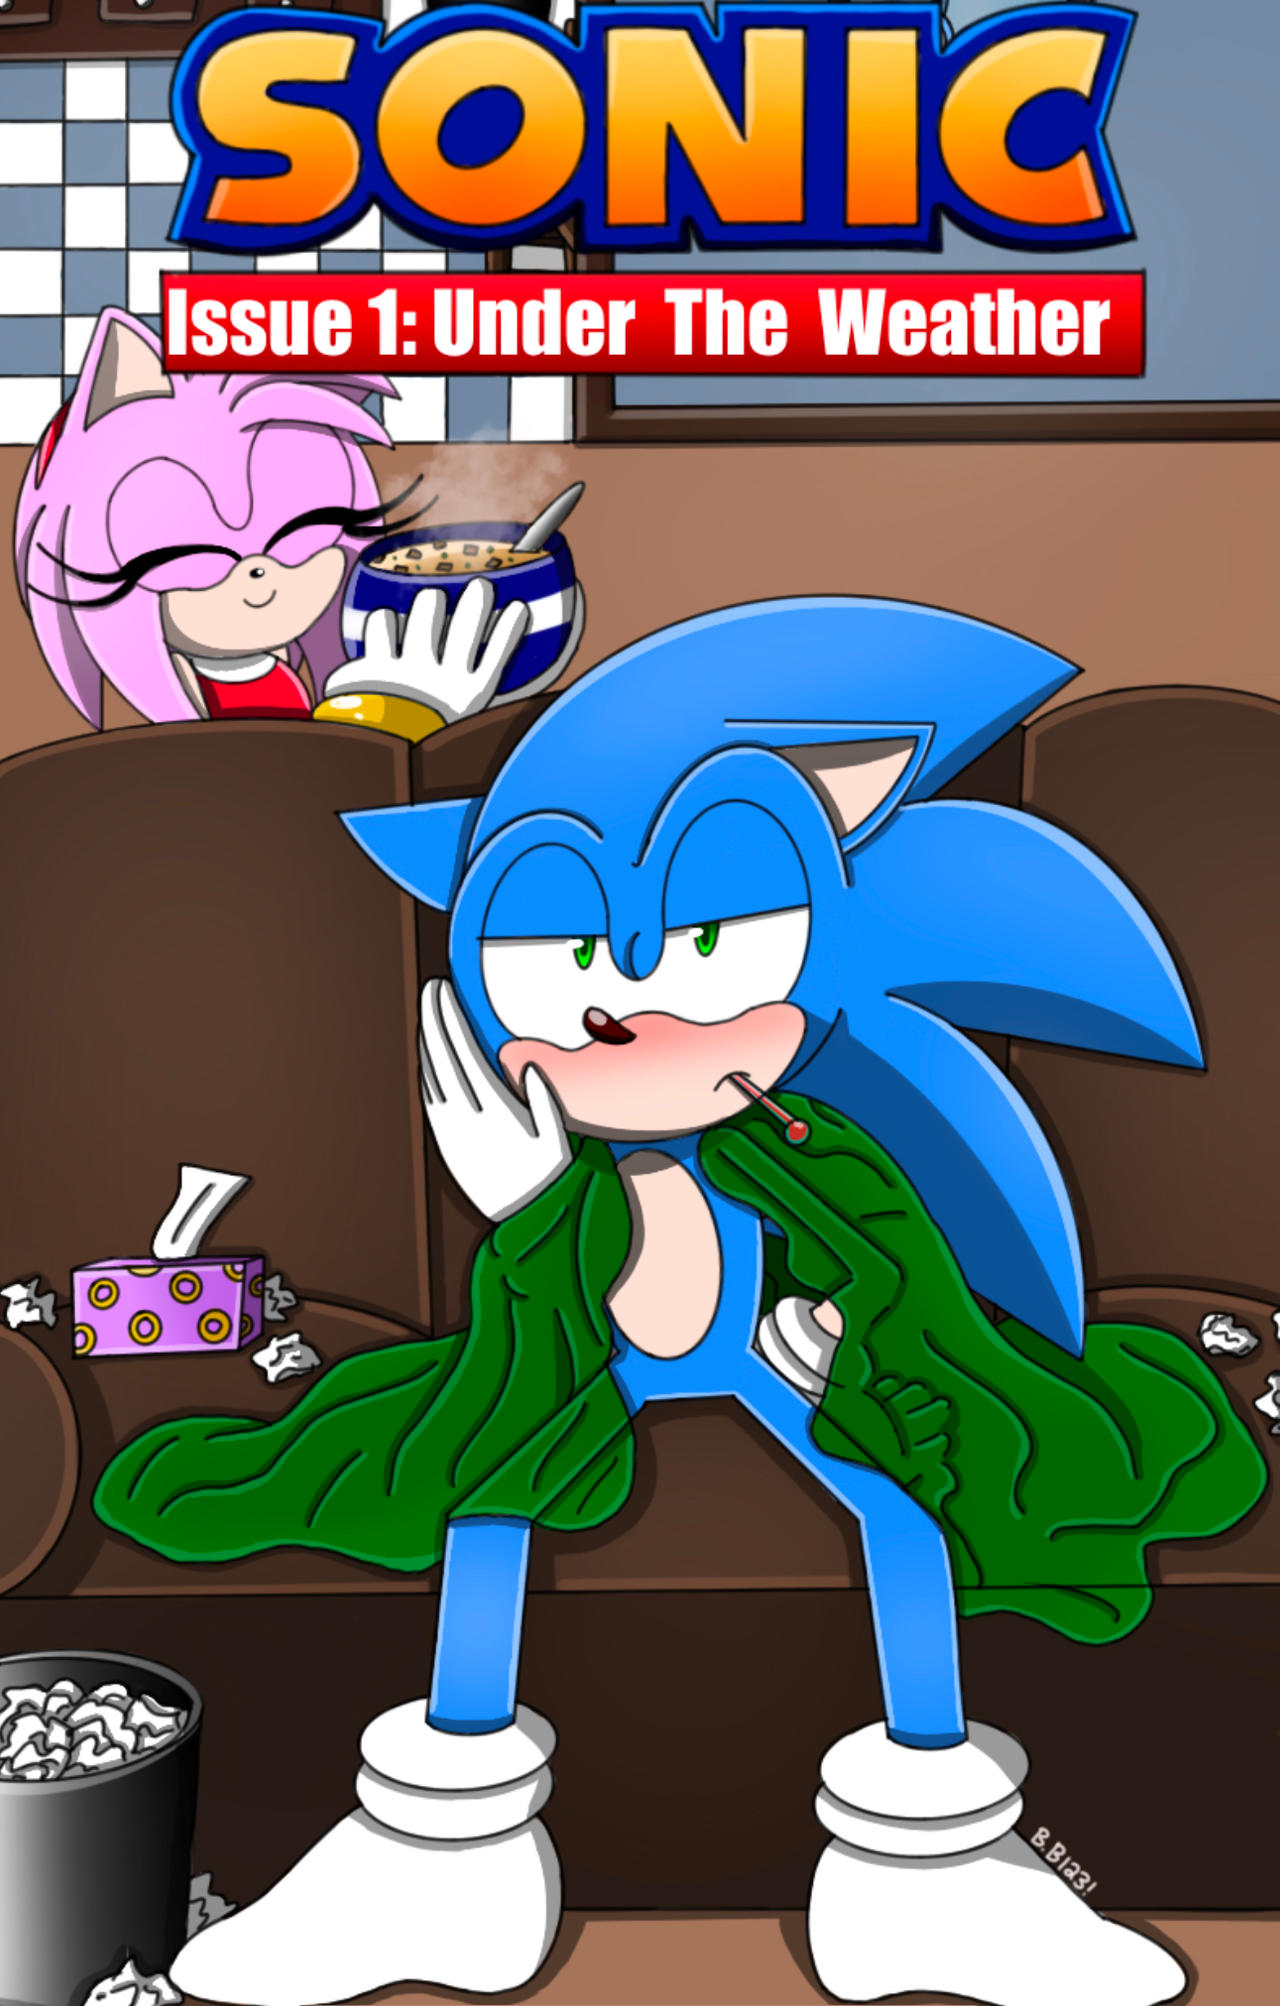 Sonic Movie Comic: Underneath the Mistletoe (1/3) by Jame5rheneaZ on  DeviantArt